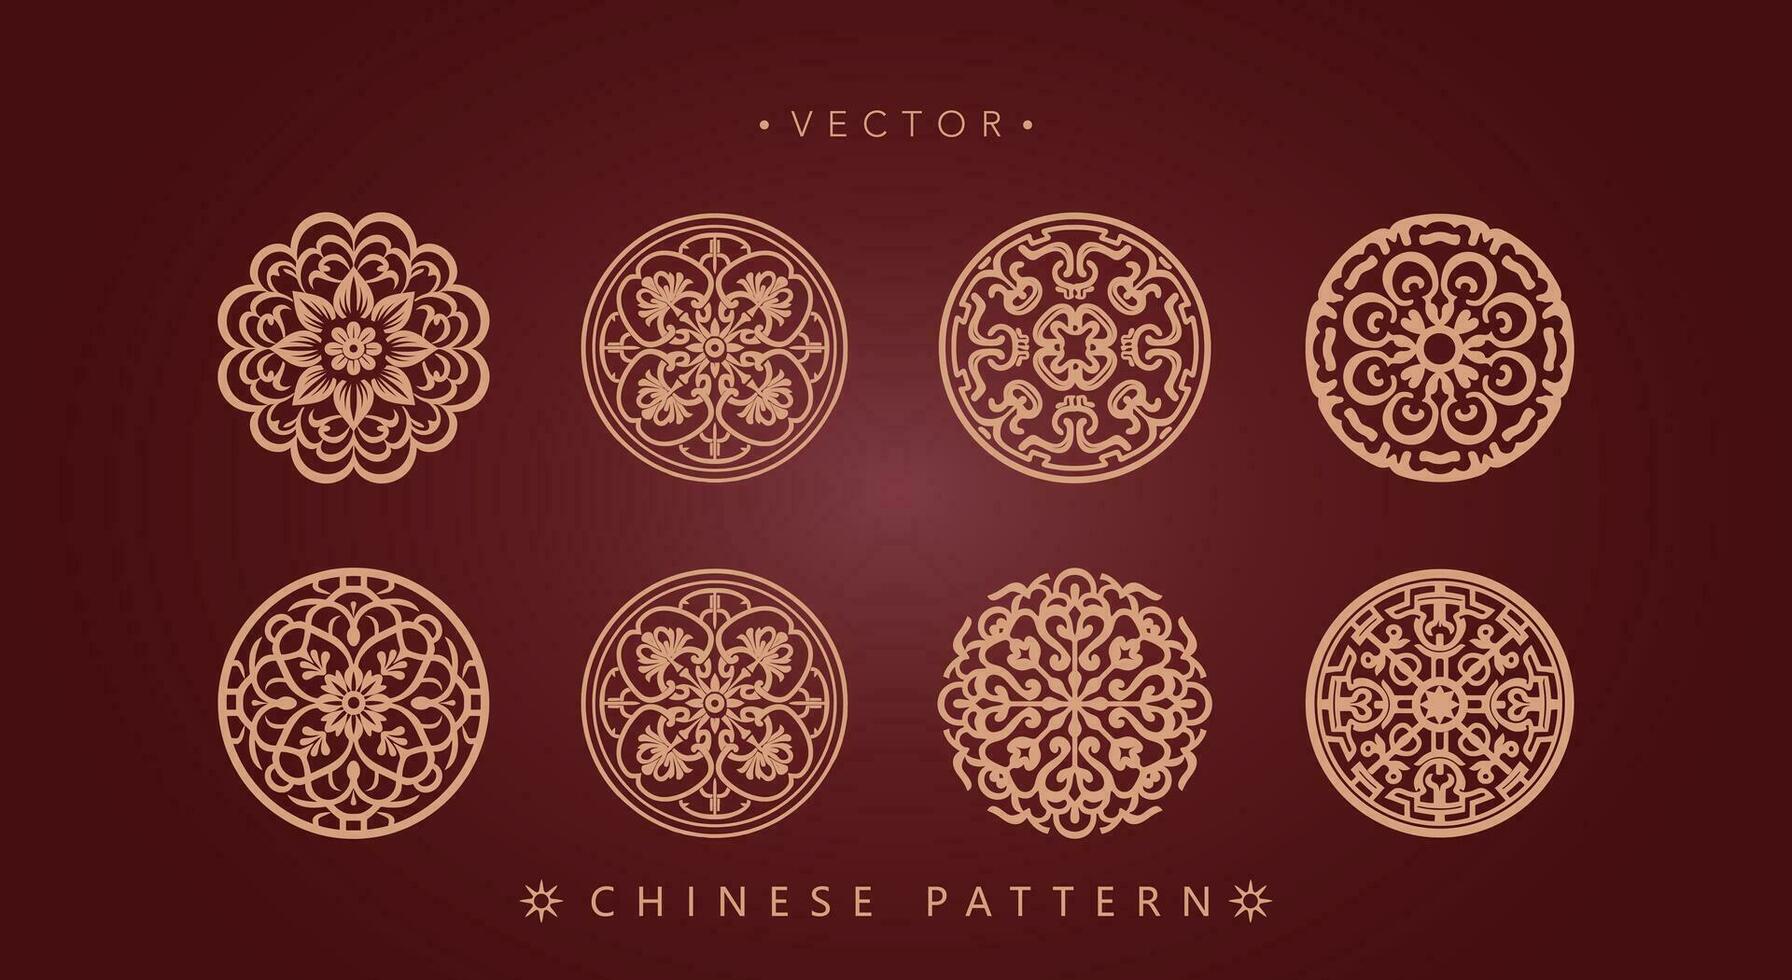 chino tradicional decorativo modelo vector